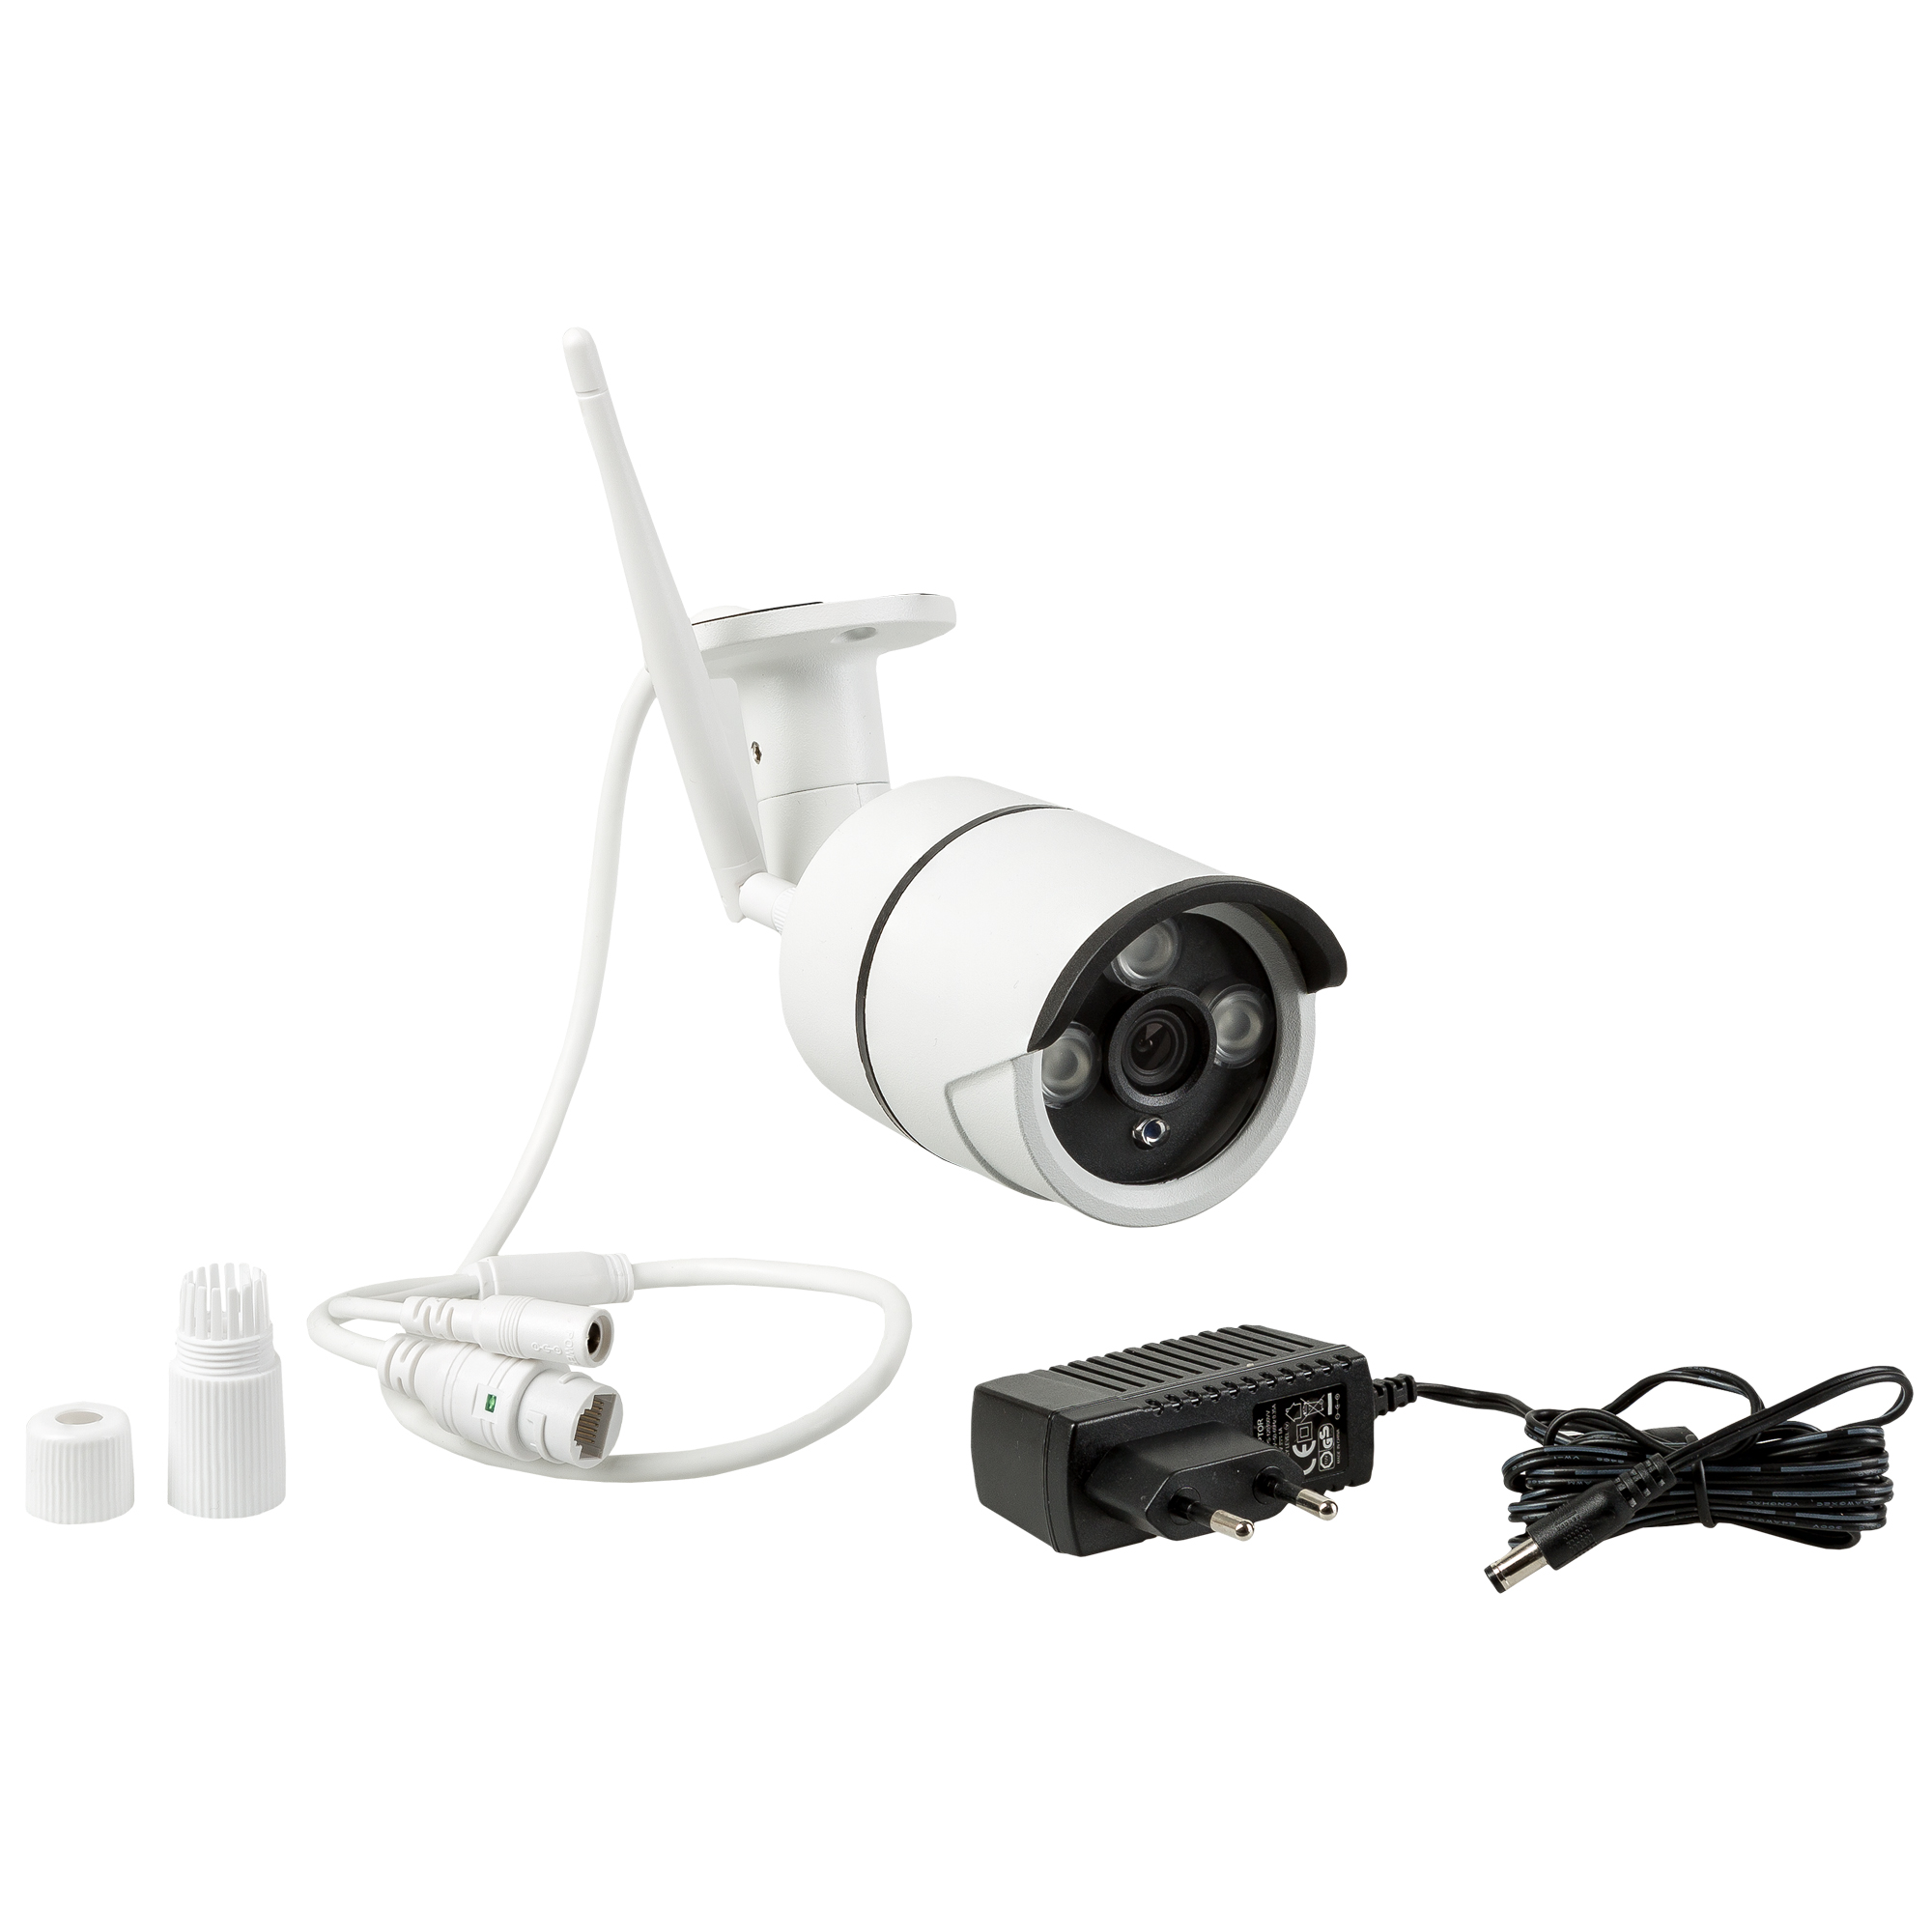 Überwachungskamera 8 Rekorder Monitor Cams Kanal Full HD, 4 SAFE2HOME Set Videoüberwachung